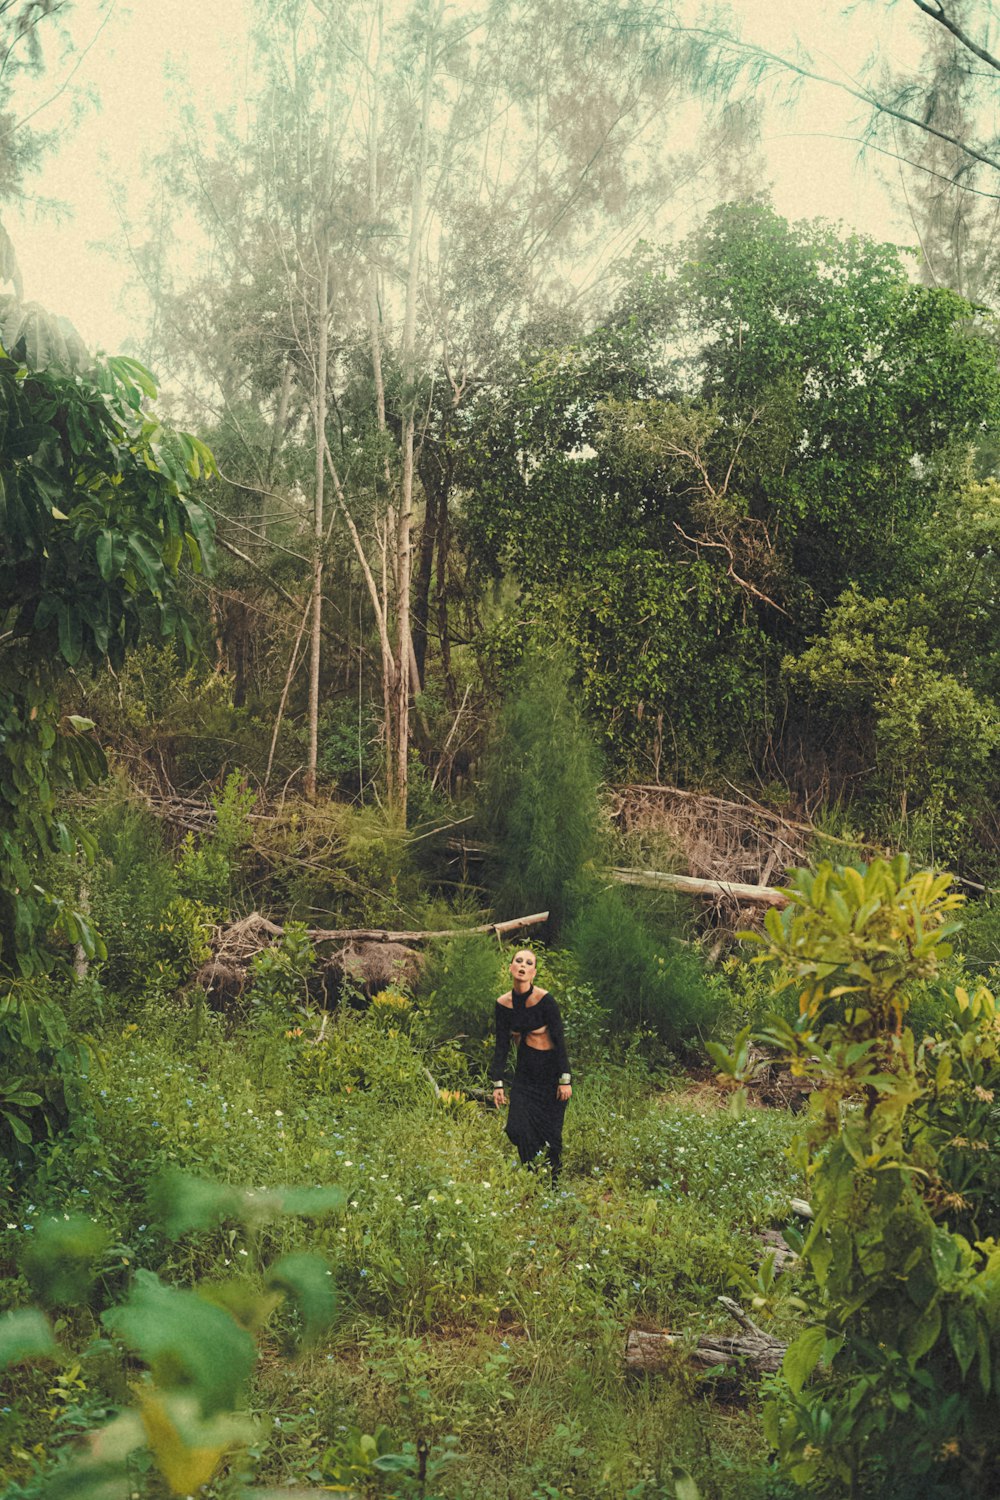 a person walking through a lush green forest